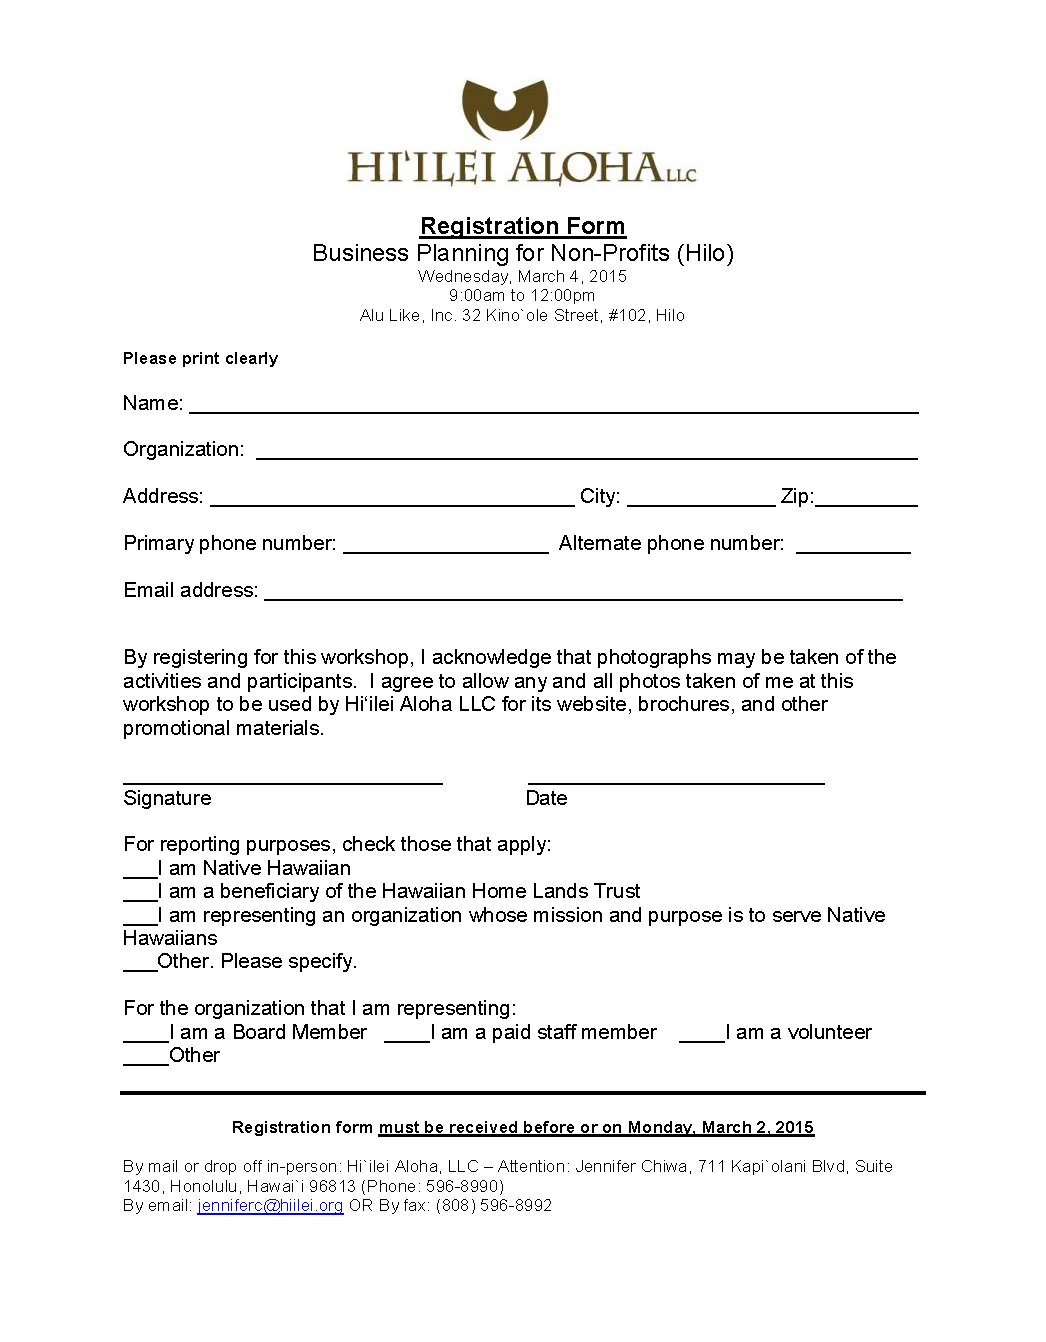 Hiilei Aloha, LLC - Registration Form